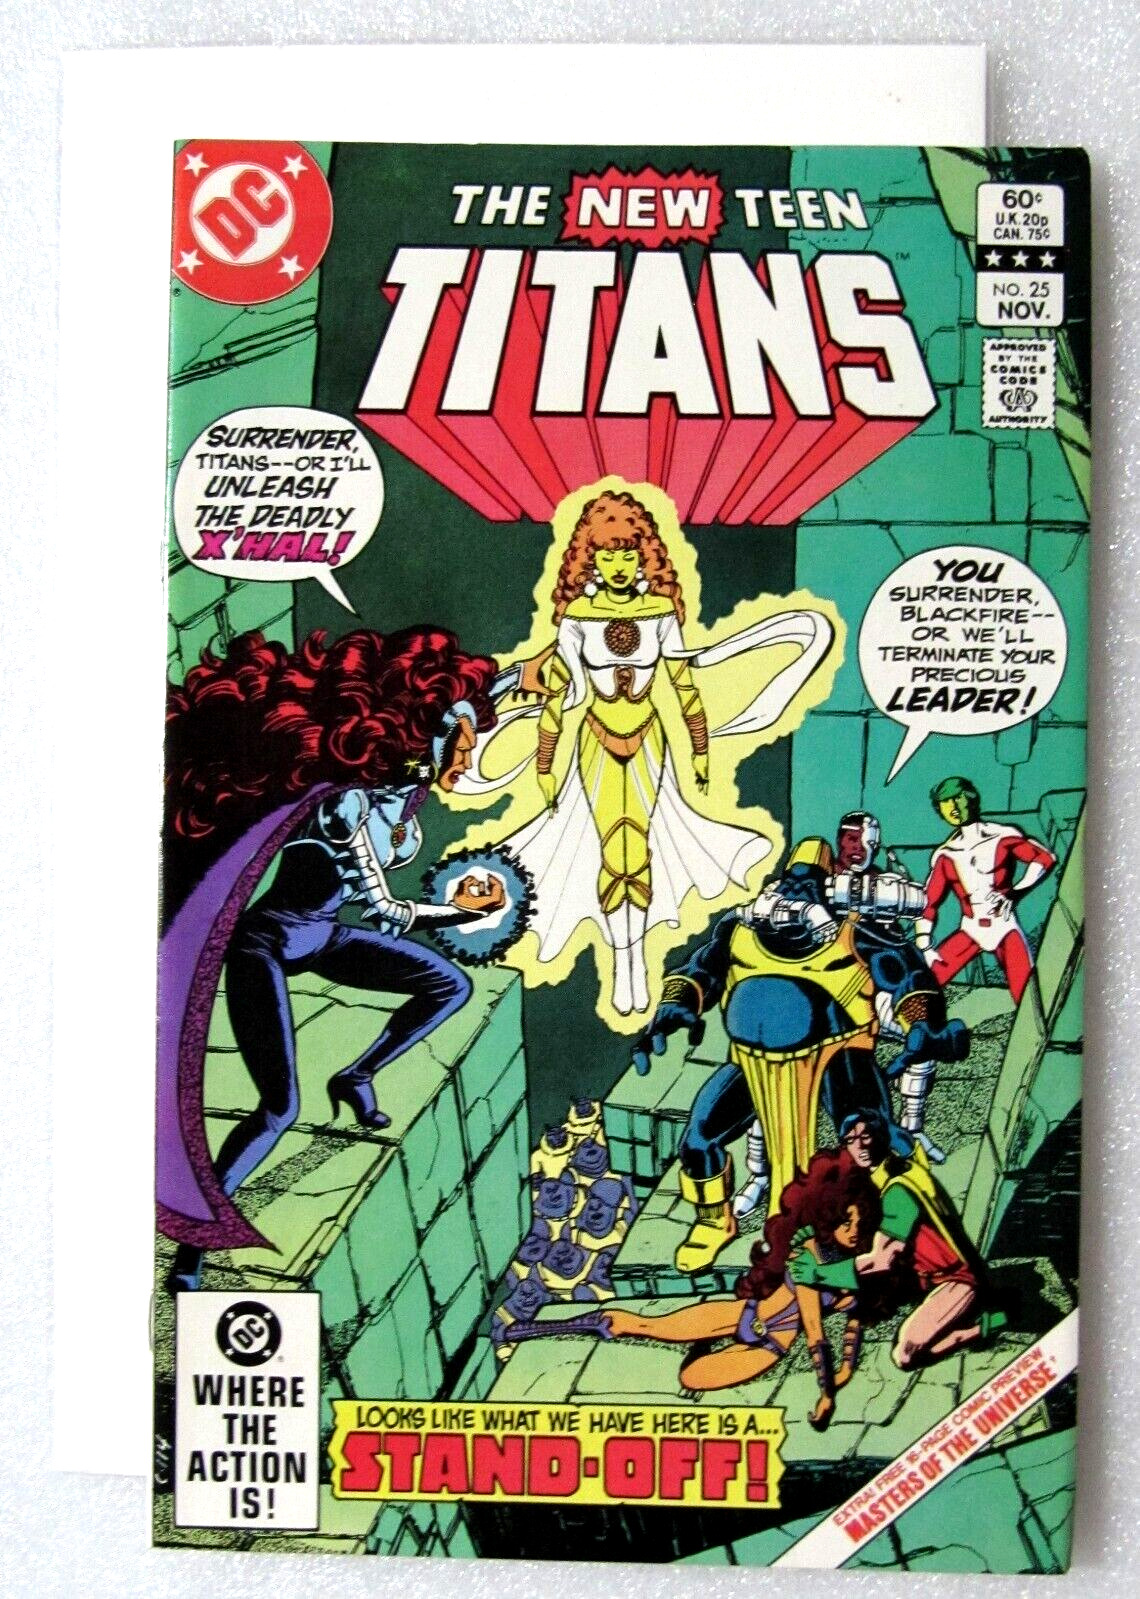 THE NEW TEEN TITANS #25 - 1982 DC COMICS - MARV WOLFMAN & PEREZ - BAG & BOARD